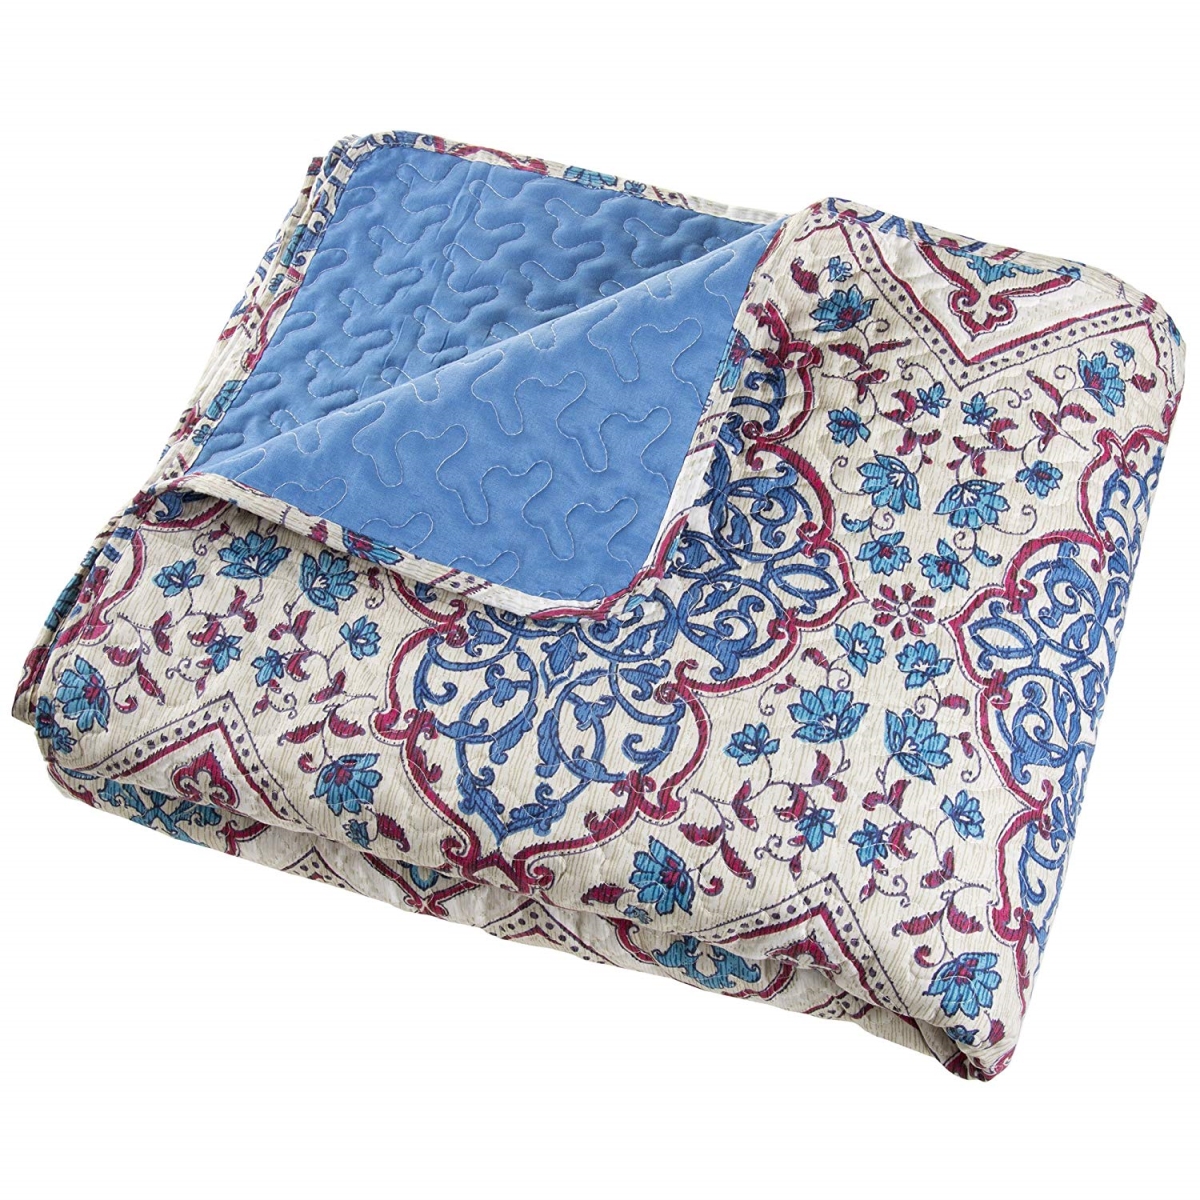 66a-41797 King Size Quilt Bed Set, 3 Piece Reversible Microfiber Quilt Bedding Set With Shams - Blue